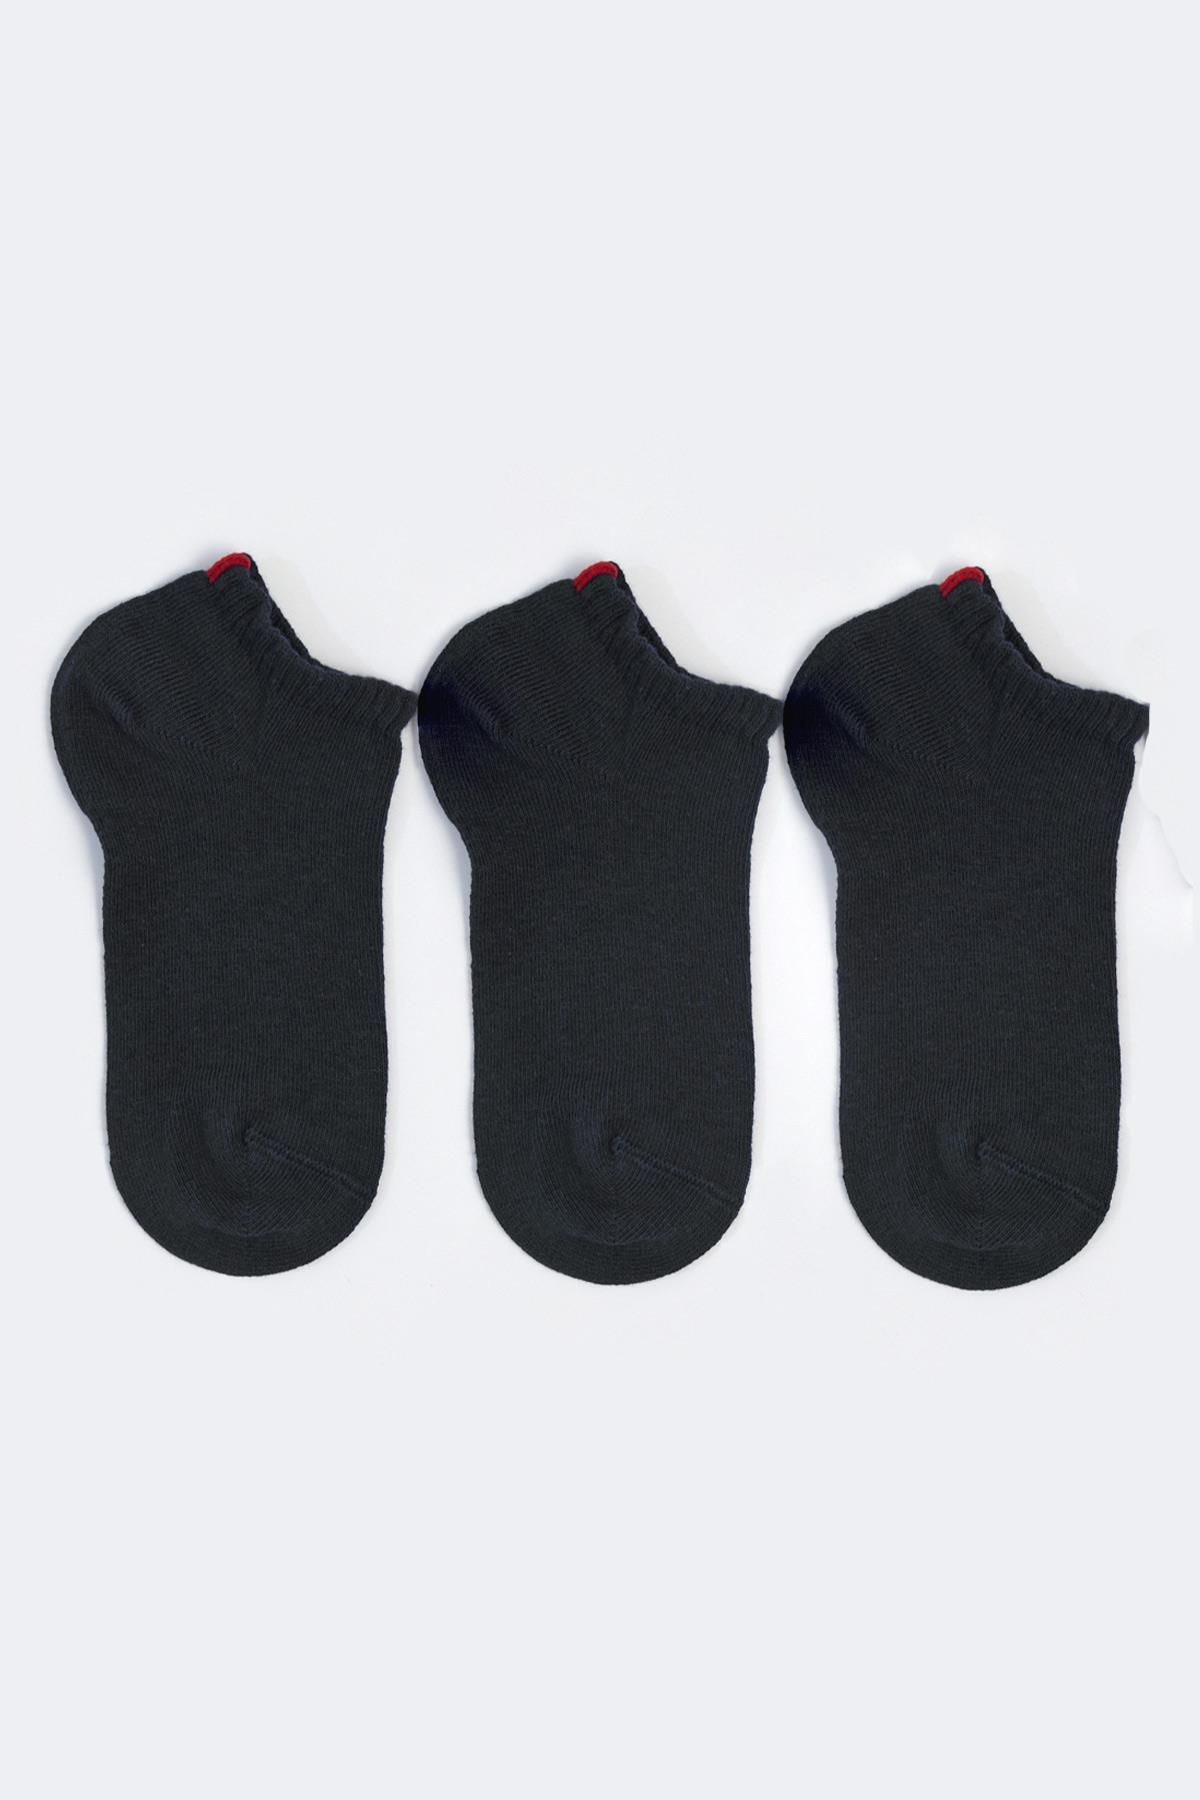 Katia & Bony Run 3'lü Kadın Basic Patik Çorap Siyah/siyah/siyah